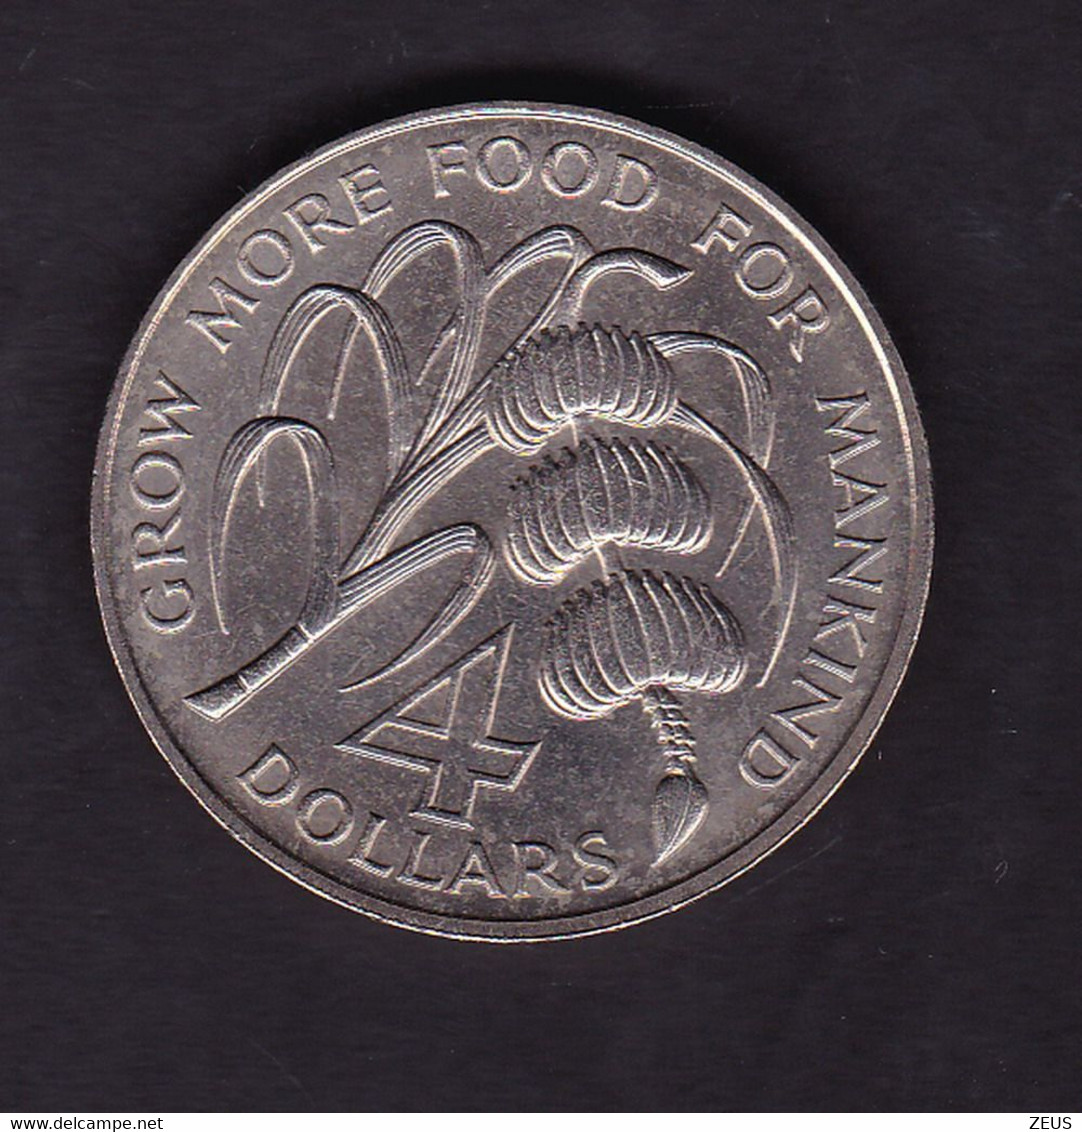 Saint Vincent: 4 DollarS 1970 " KM 13 F. A. O. " - British Caribbean Territories